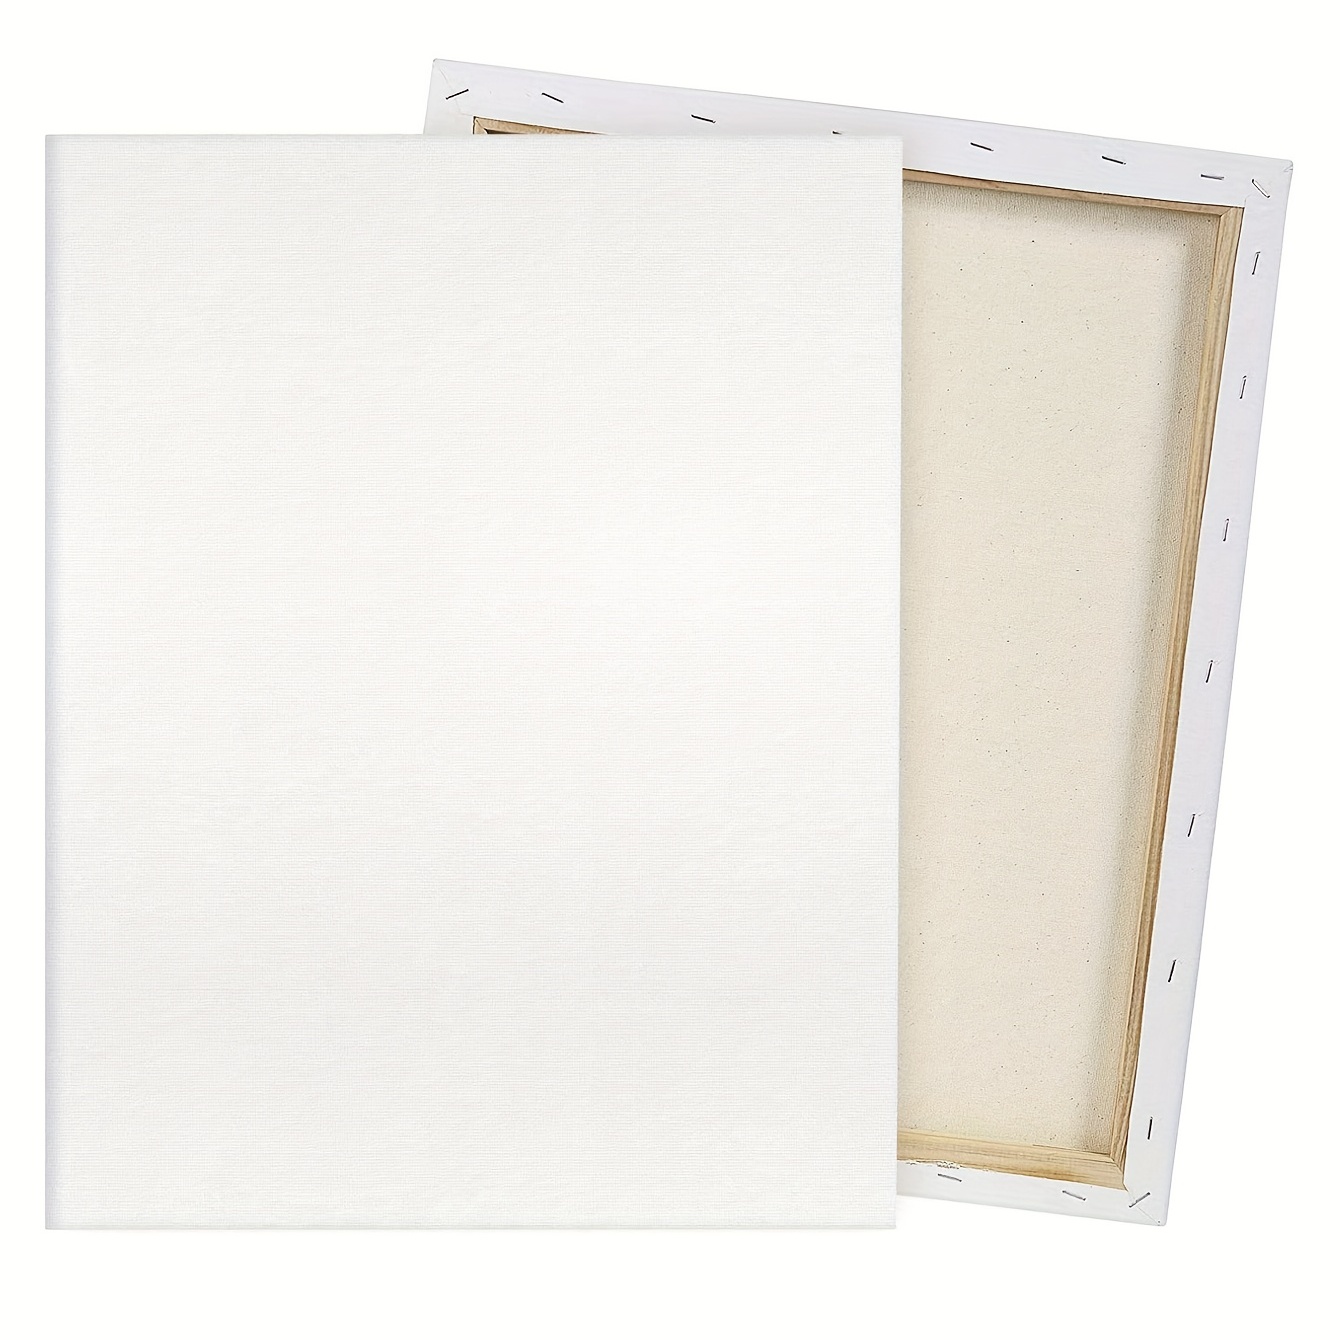 Arteza Stretched Canvas, Classic, White, 8x10, Blank Canvas